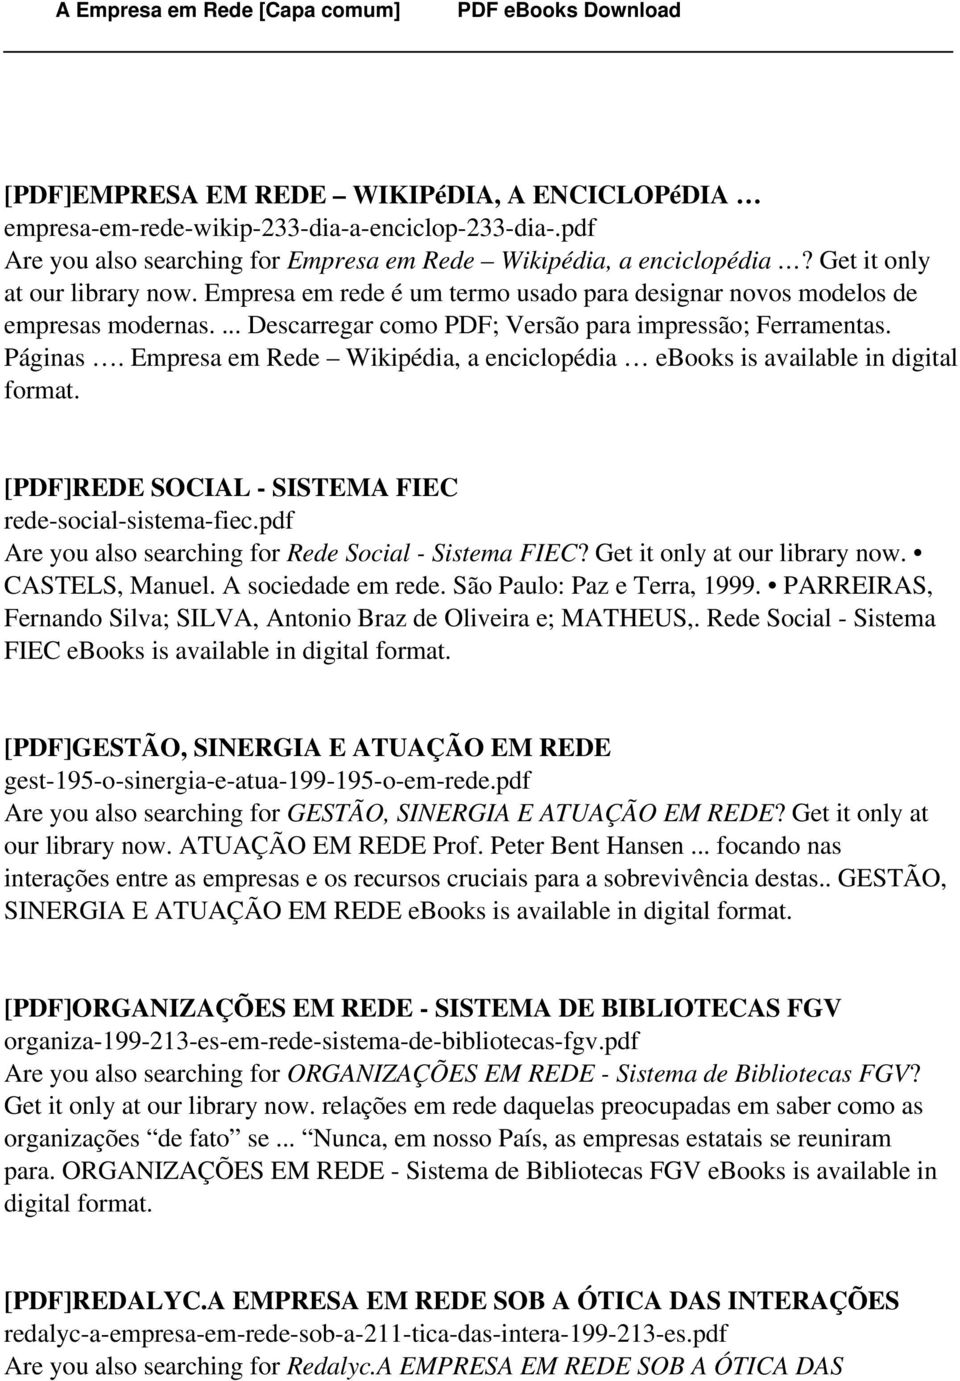 Empresa em Rede Wikipédia, a enciclopédia ebooks is available in digital format. [PDF]REDE SOCIAL - SISTEMA FIEC rede-social-sistema-fiec.pdf Are you also searching for Rede Social - Sistema FIEC?